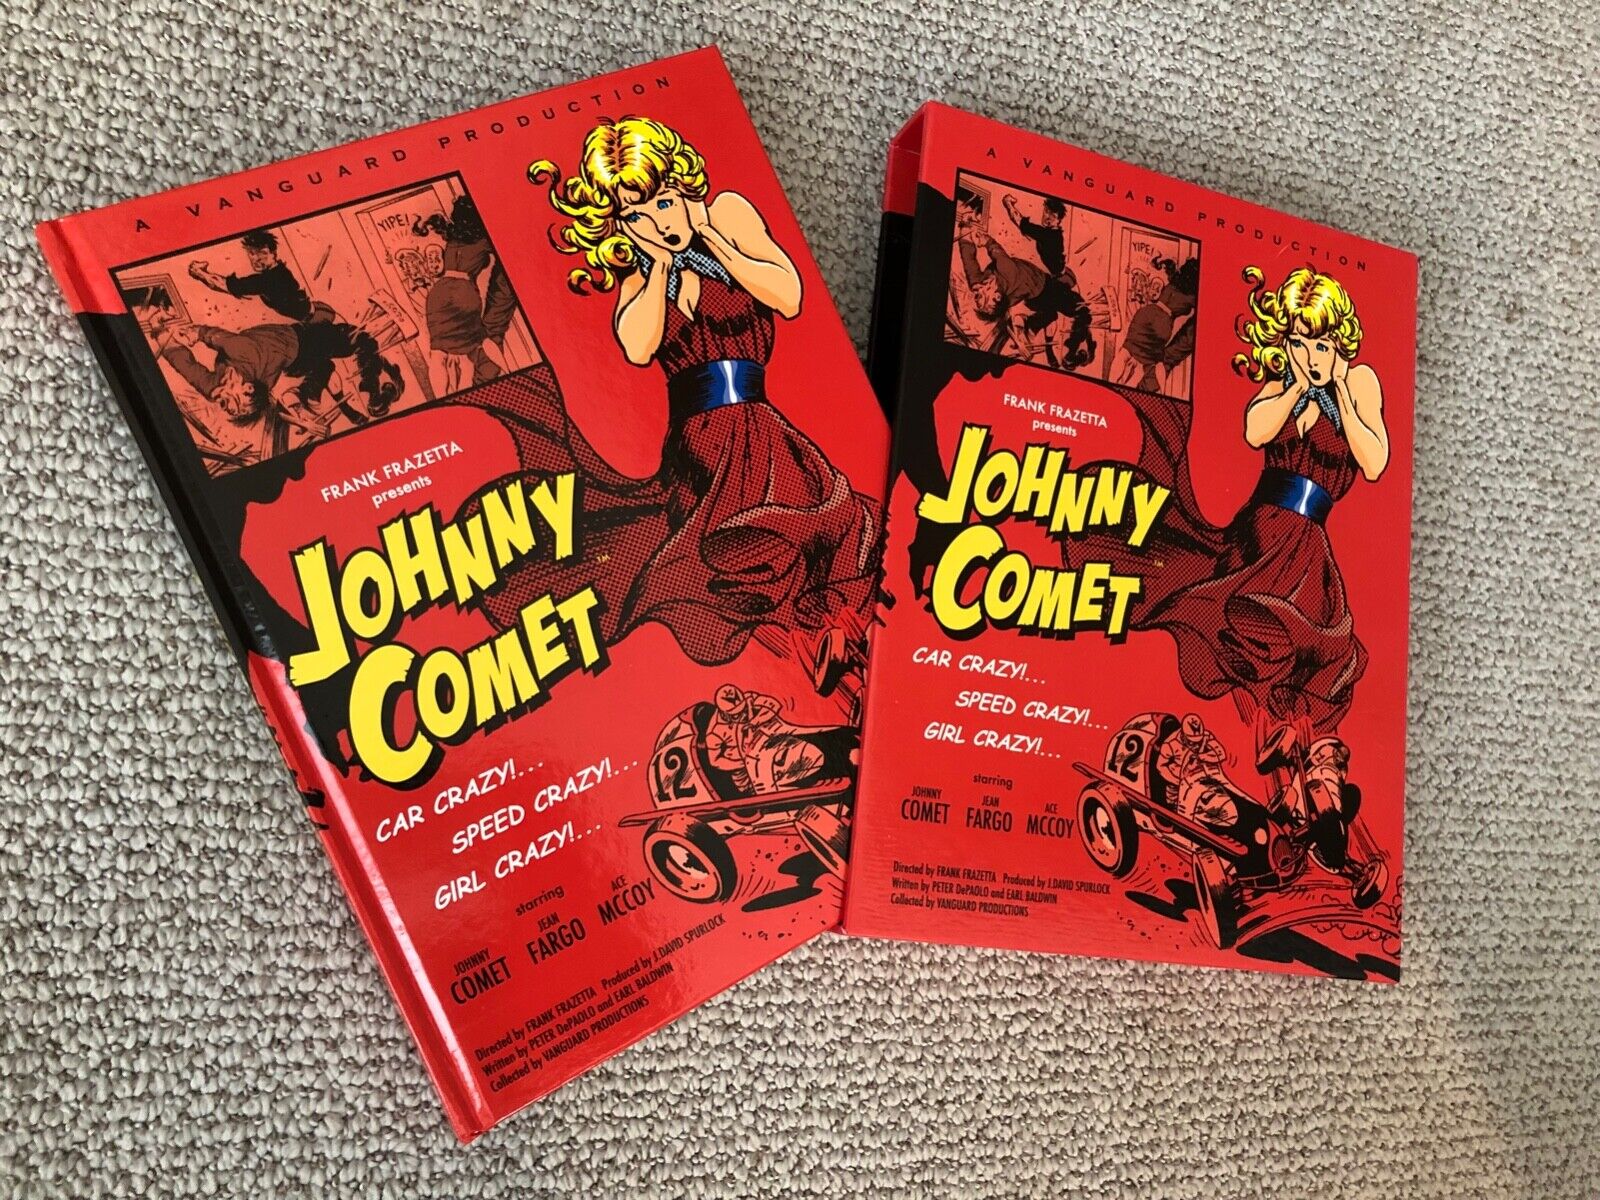 Complete Johnny Comet by Frank Frazetta Vanguard Deluxe hardcover with Slipcase